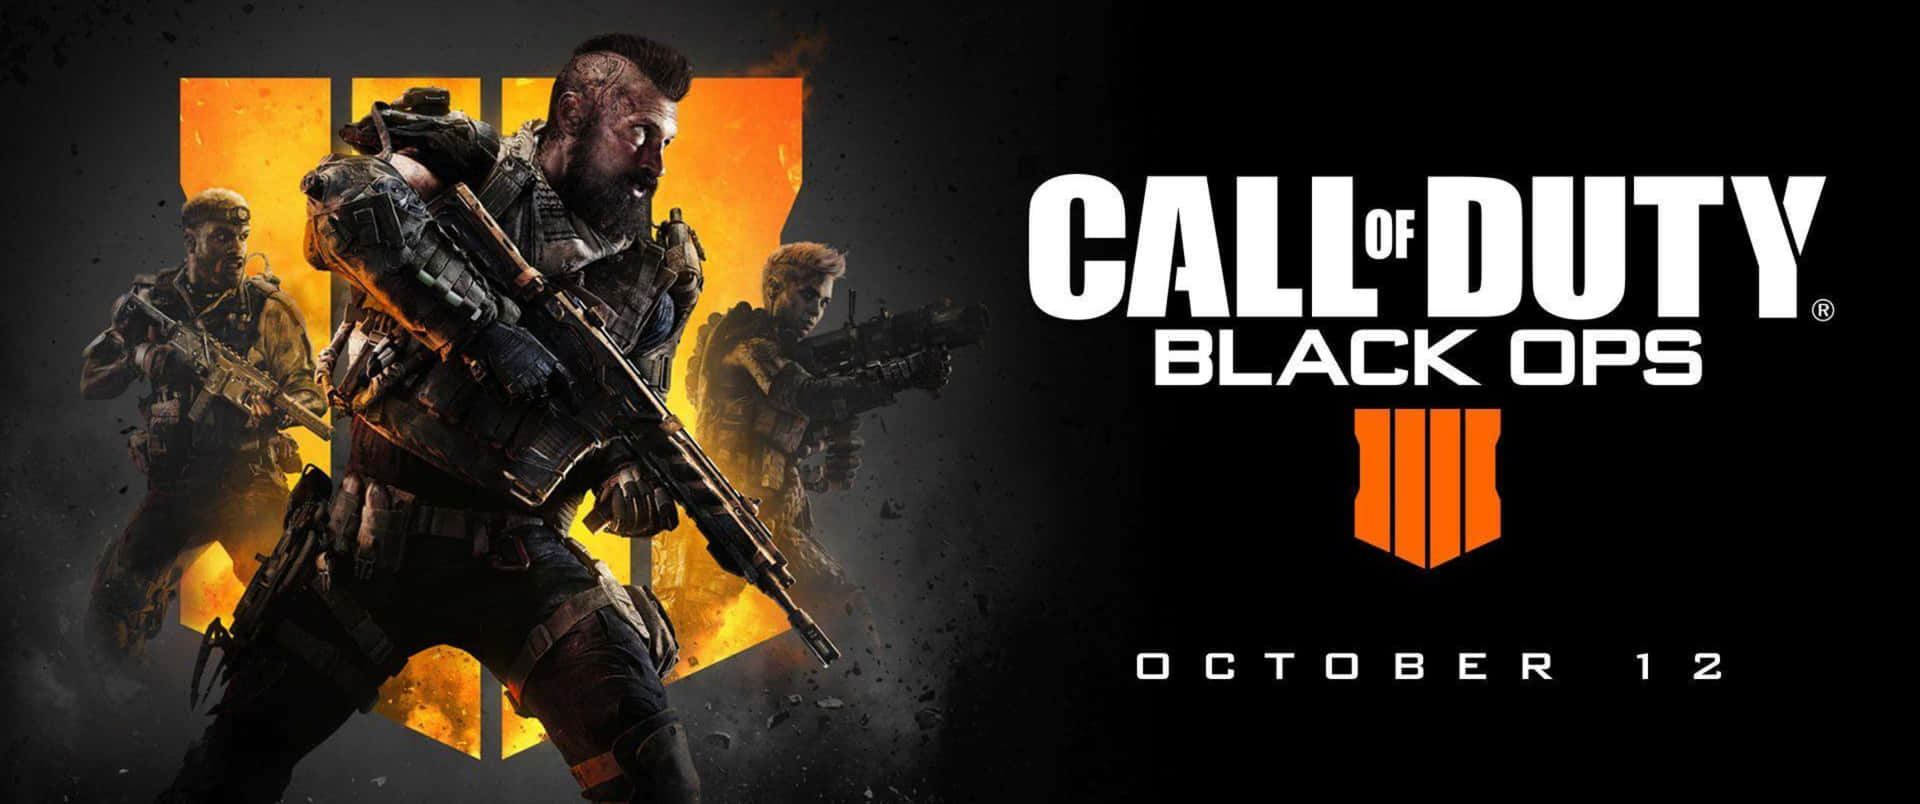 Sumérgeteen El Mundo De Call Of Duty: Black Ops 4